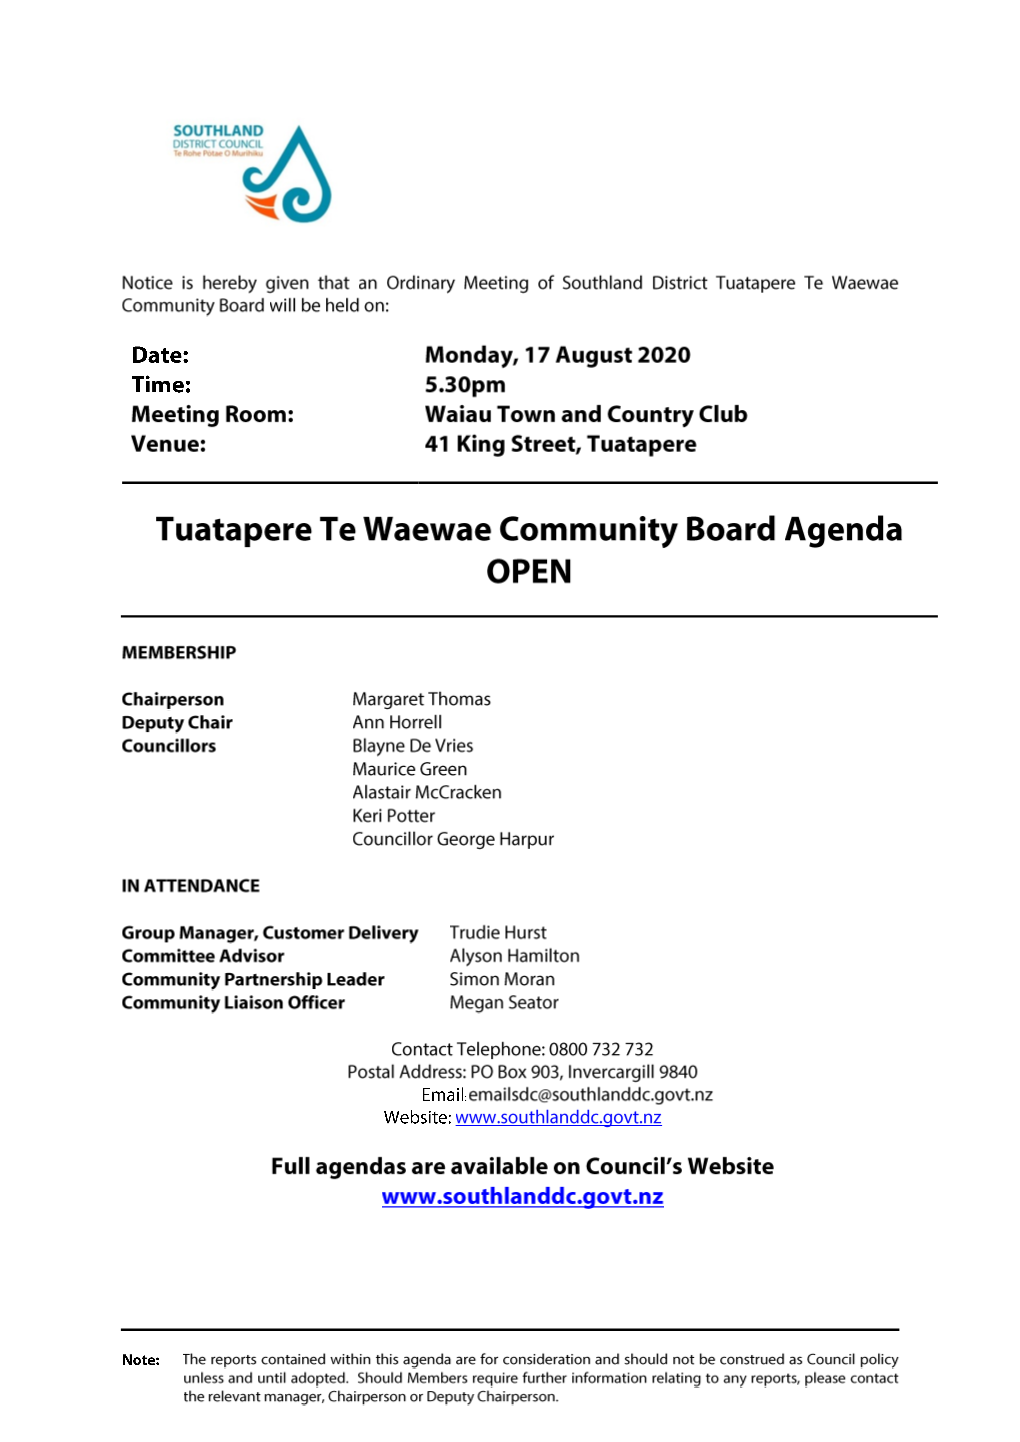 Agenda of Tuatapere Te Waewae Community Board